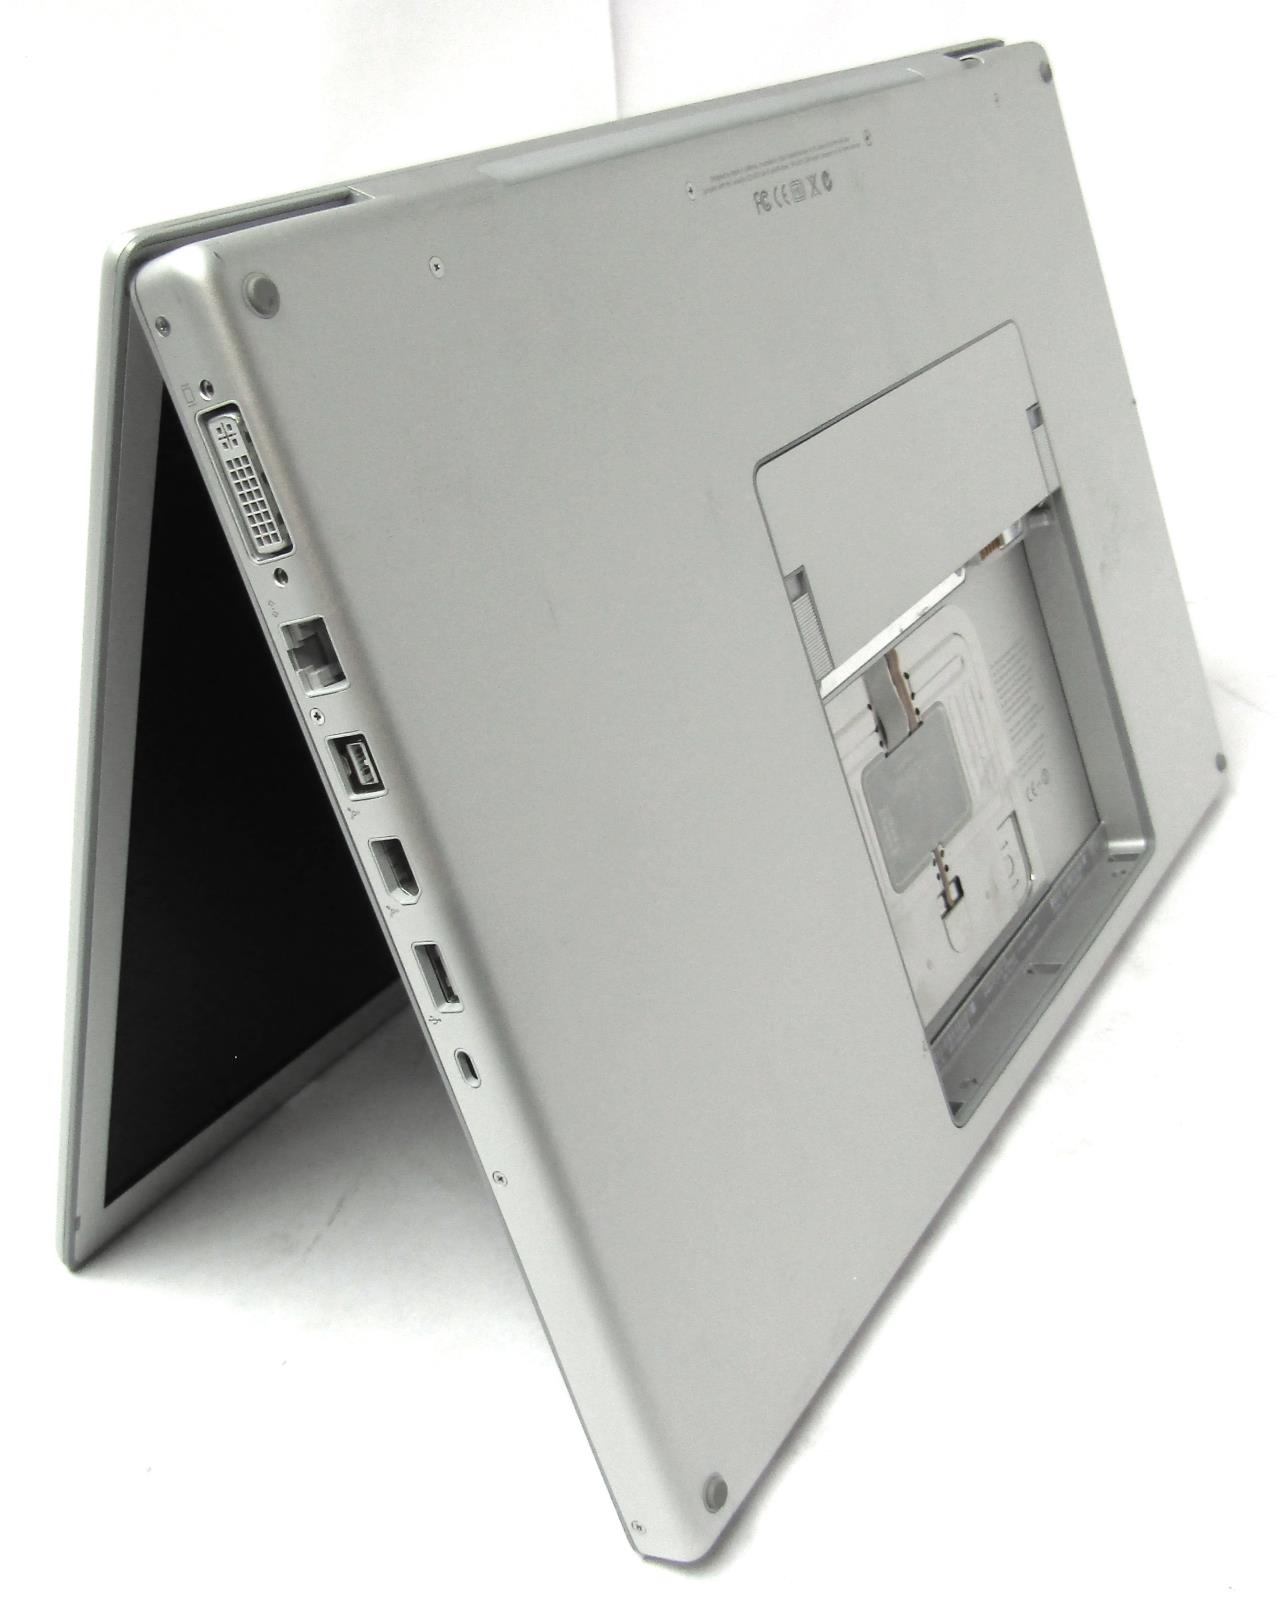 late 2006 macbook pro